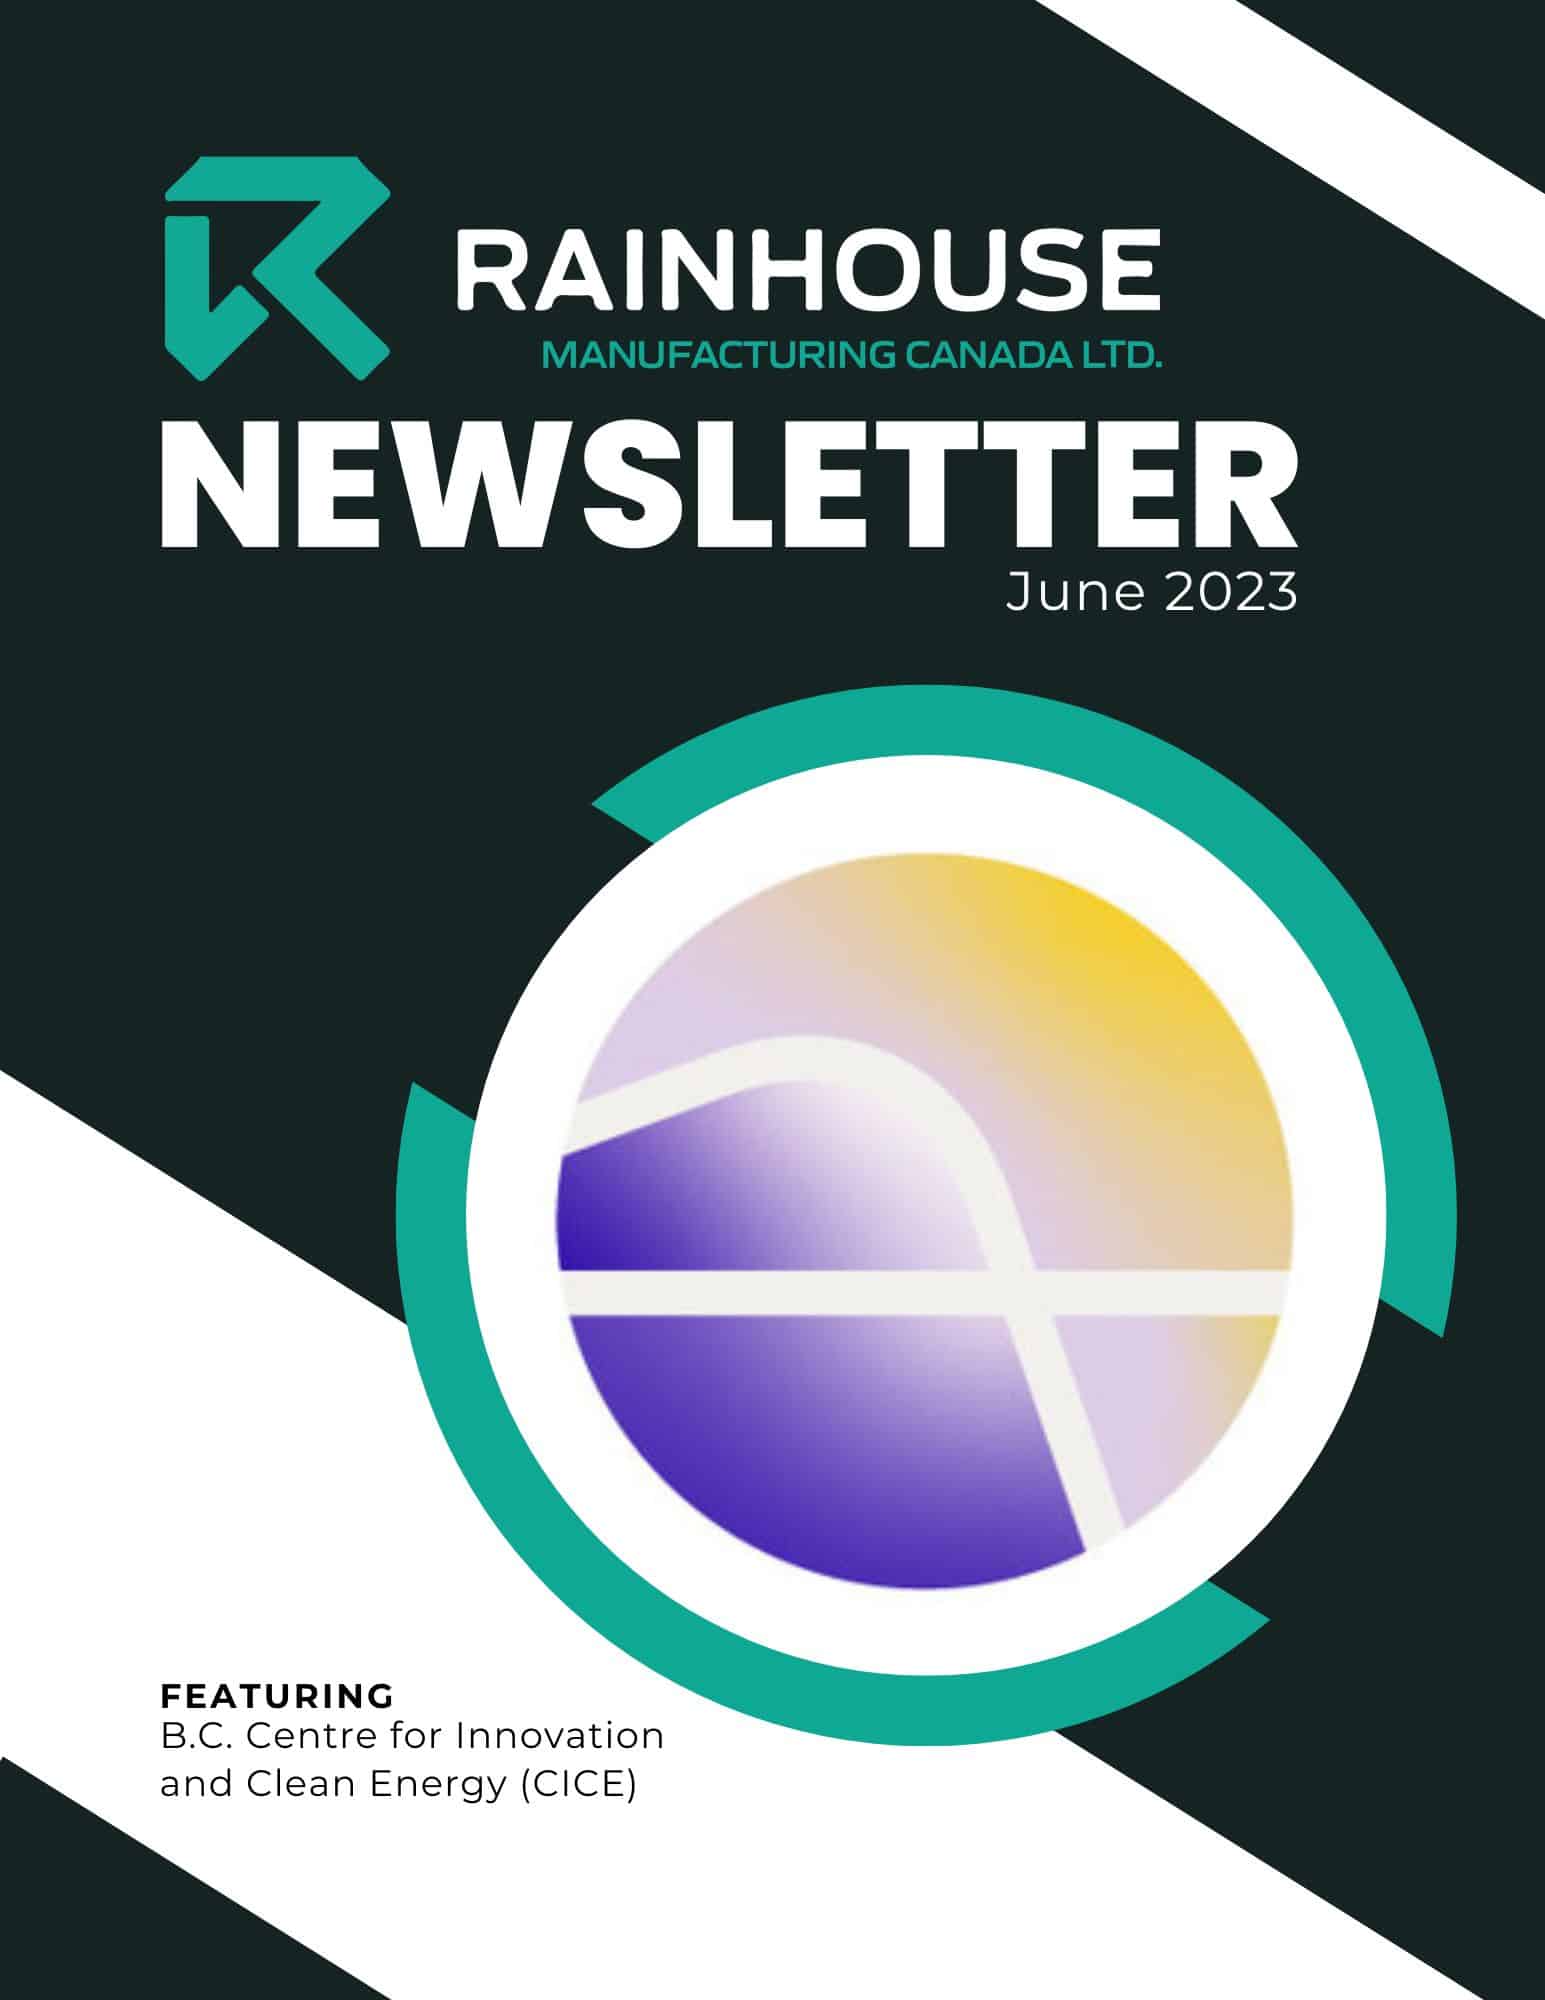 Rainhouse receives 750K Grant from CICE